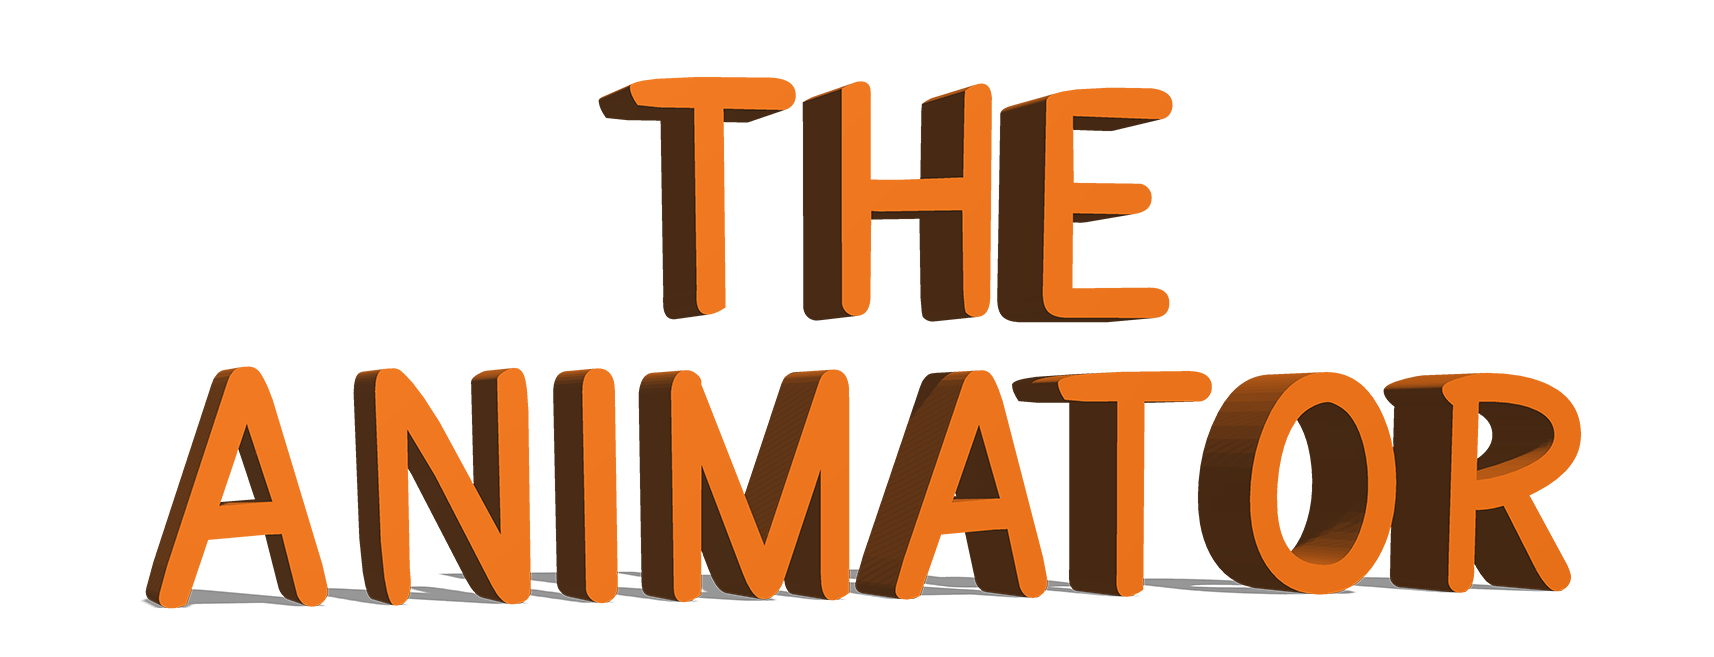 The Animator logo